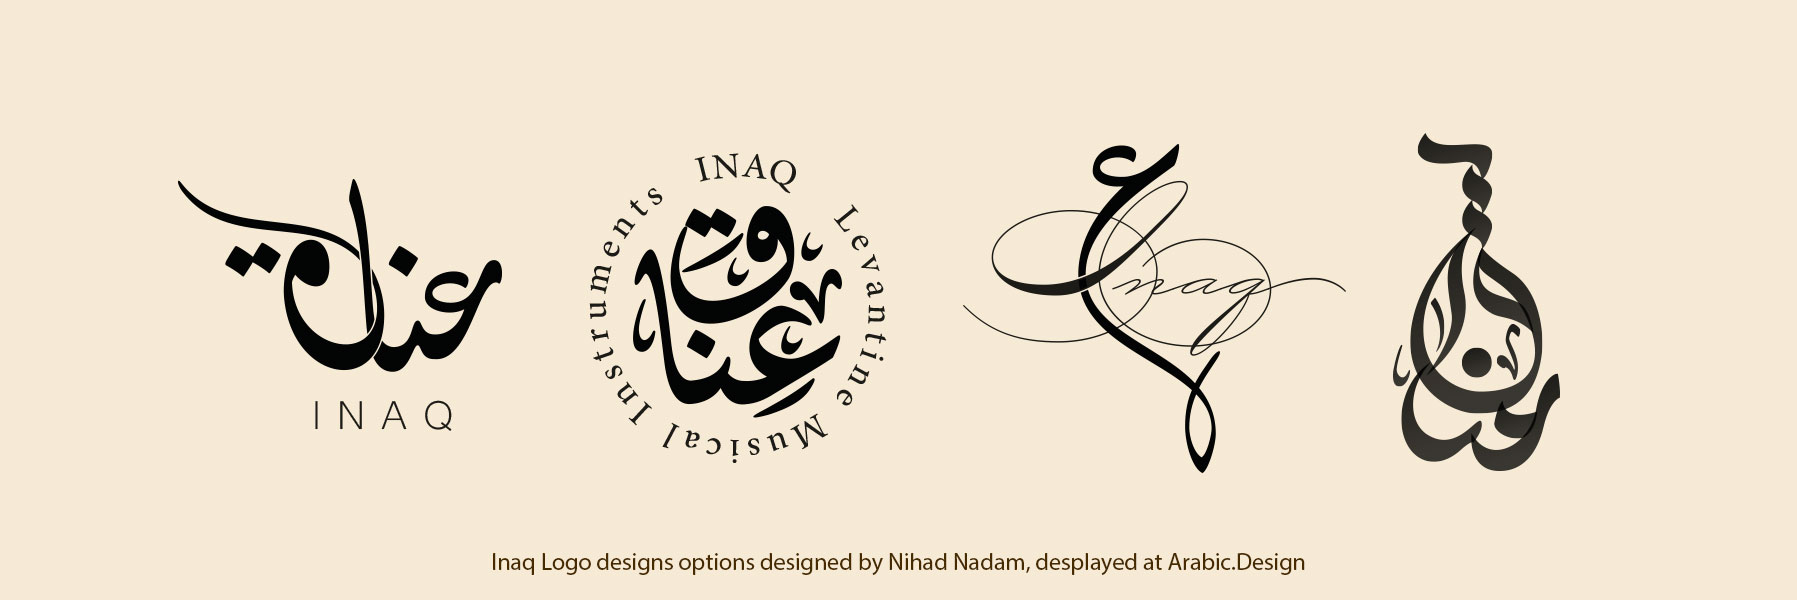 Inaq Arabic Logo Design by Nihad Nadam